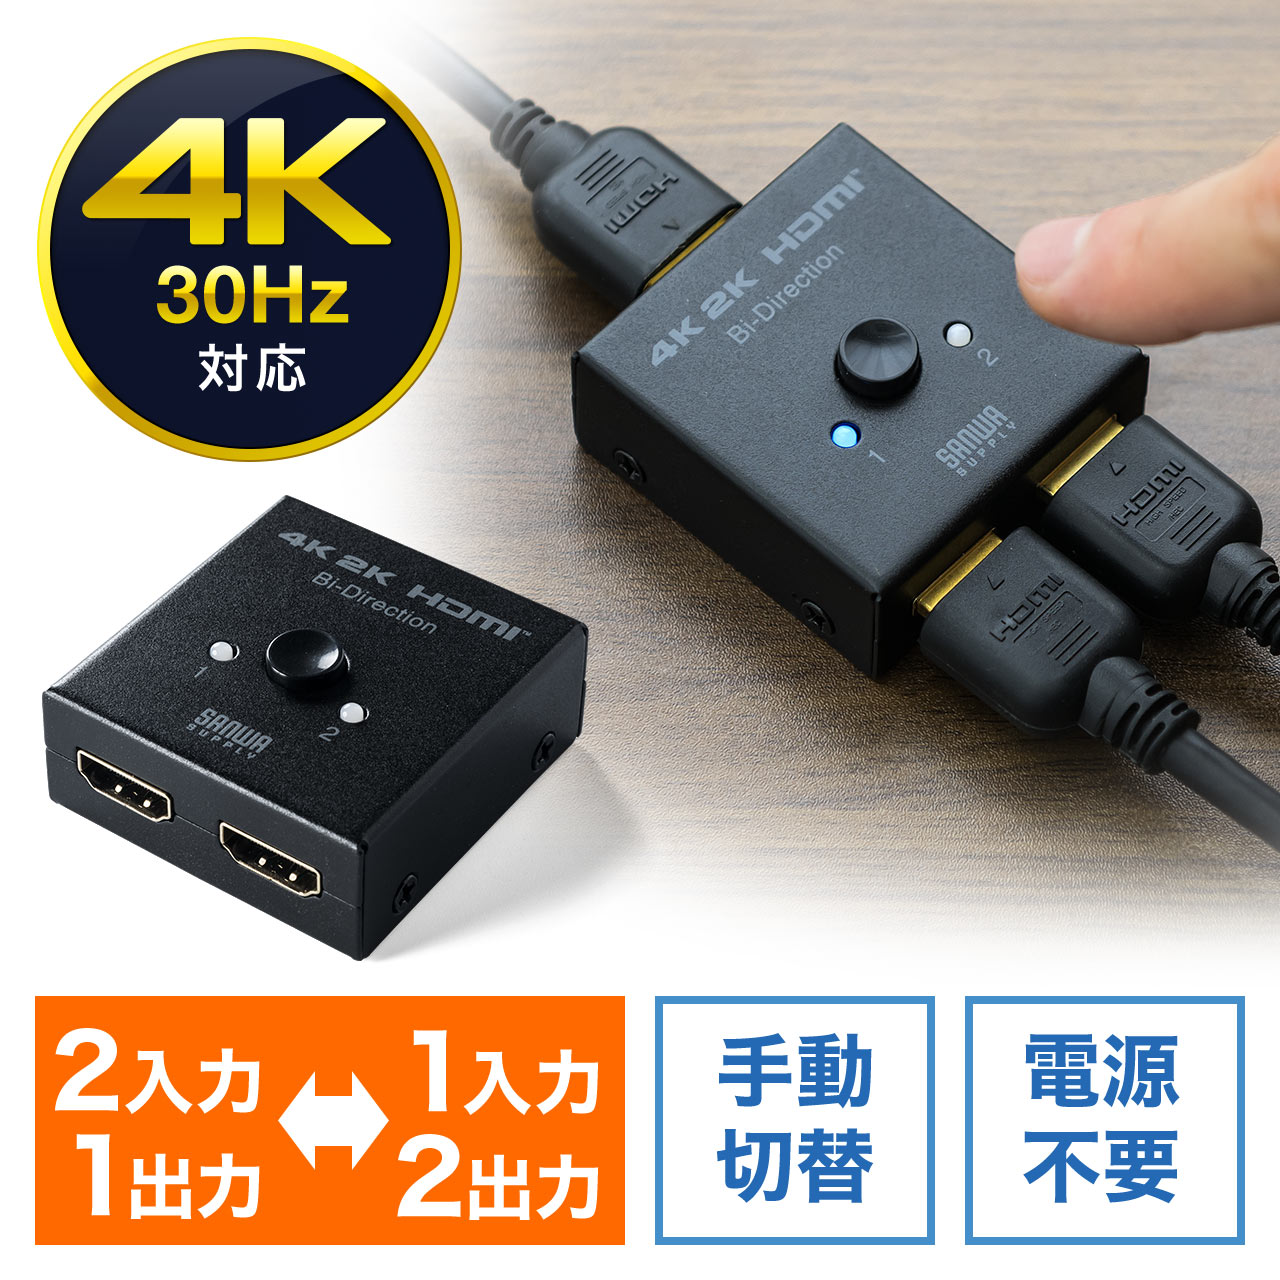 双方向HDMI切替器 2入力1出力 1入力2出力 4K/30Hz対応 HDMIセレクター 400-SW028